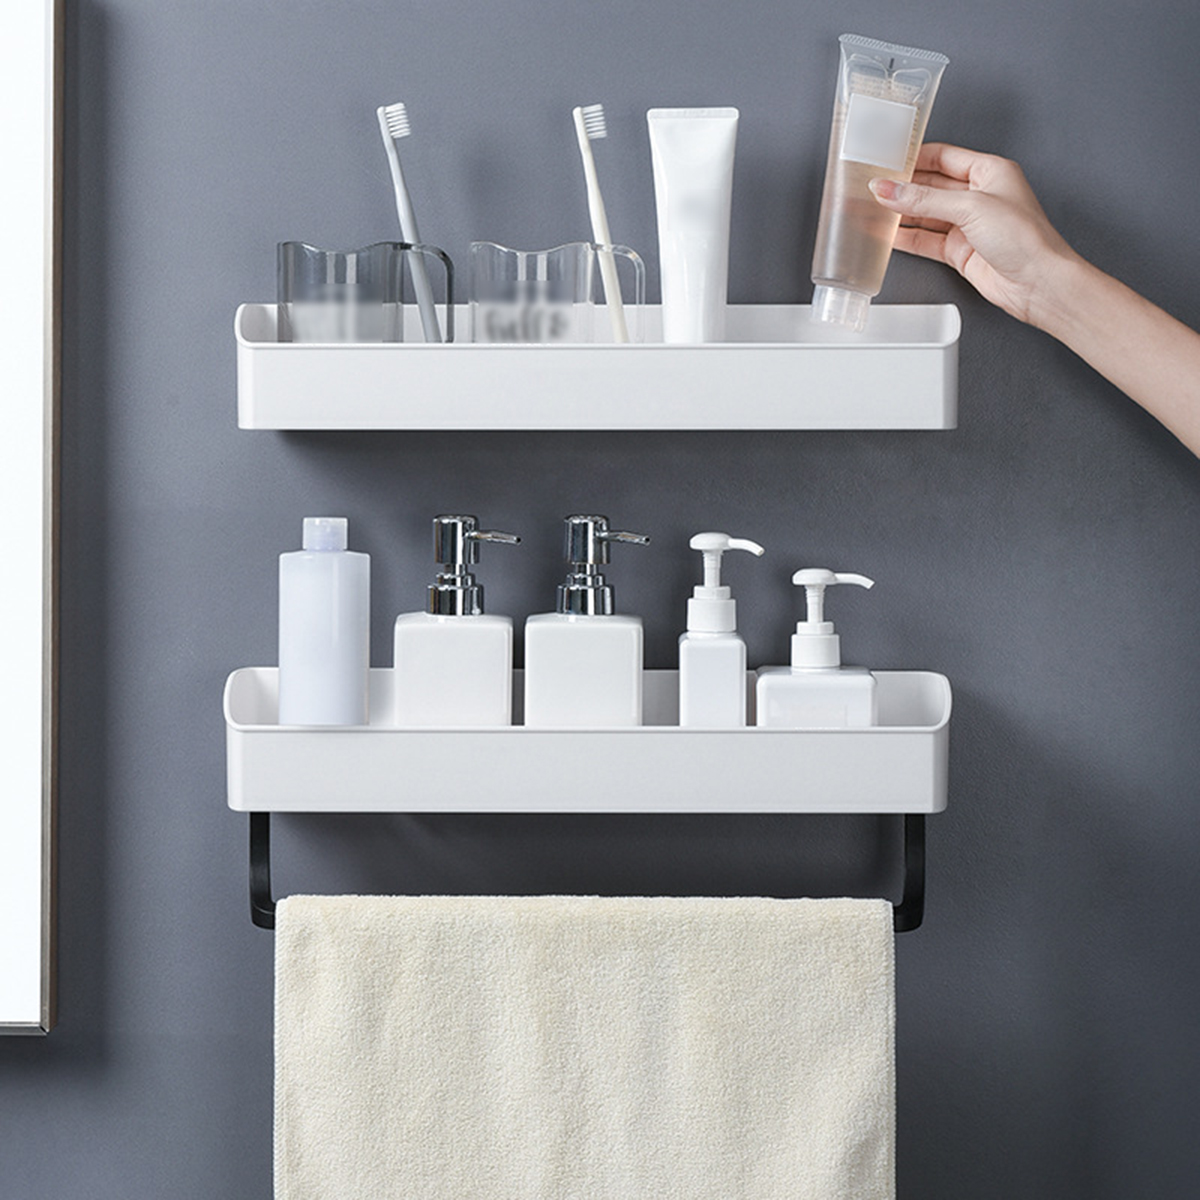 Bathroom-Wall-Mounted-Kitchen-Storage-Rack-Towel-Shelf-Organizer-Shower-Shampoo-Holder-1663521-1